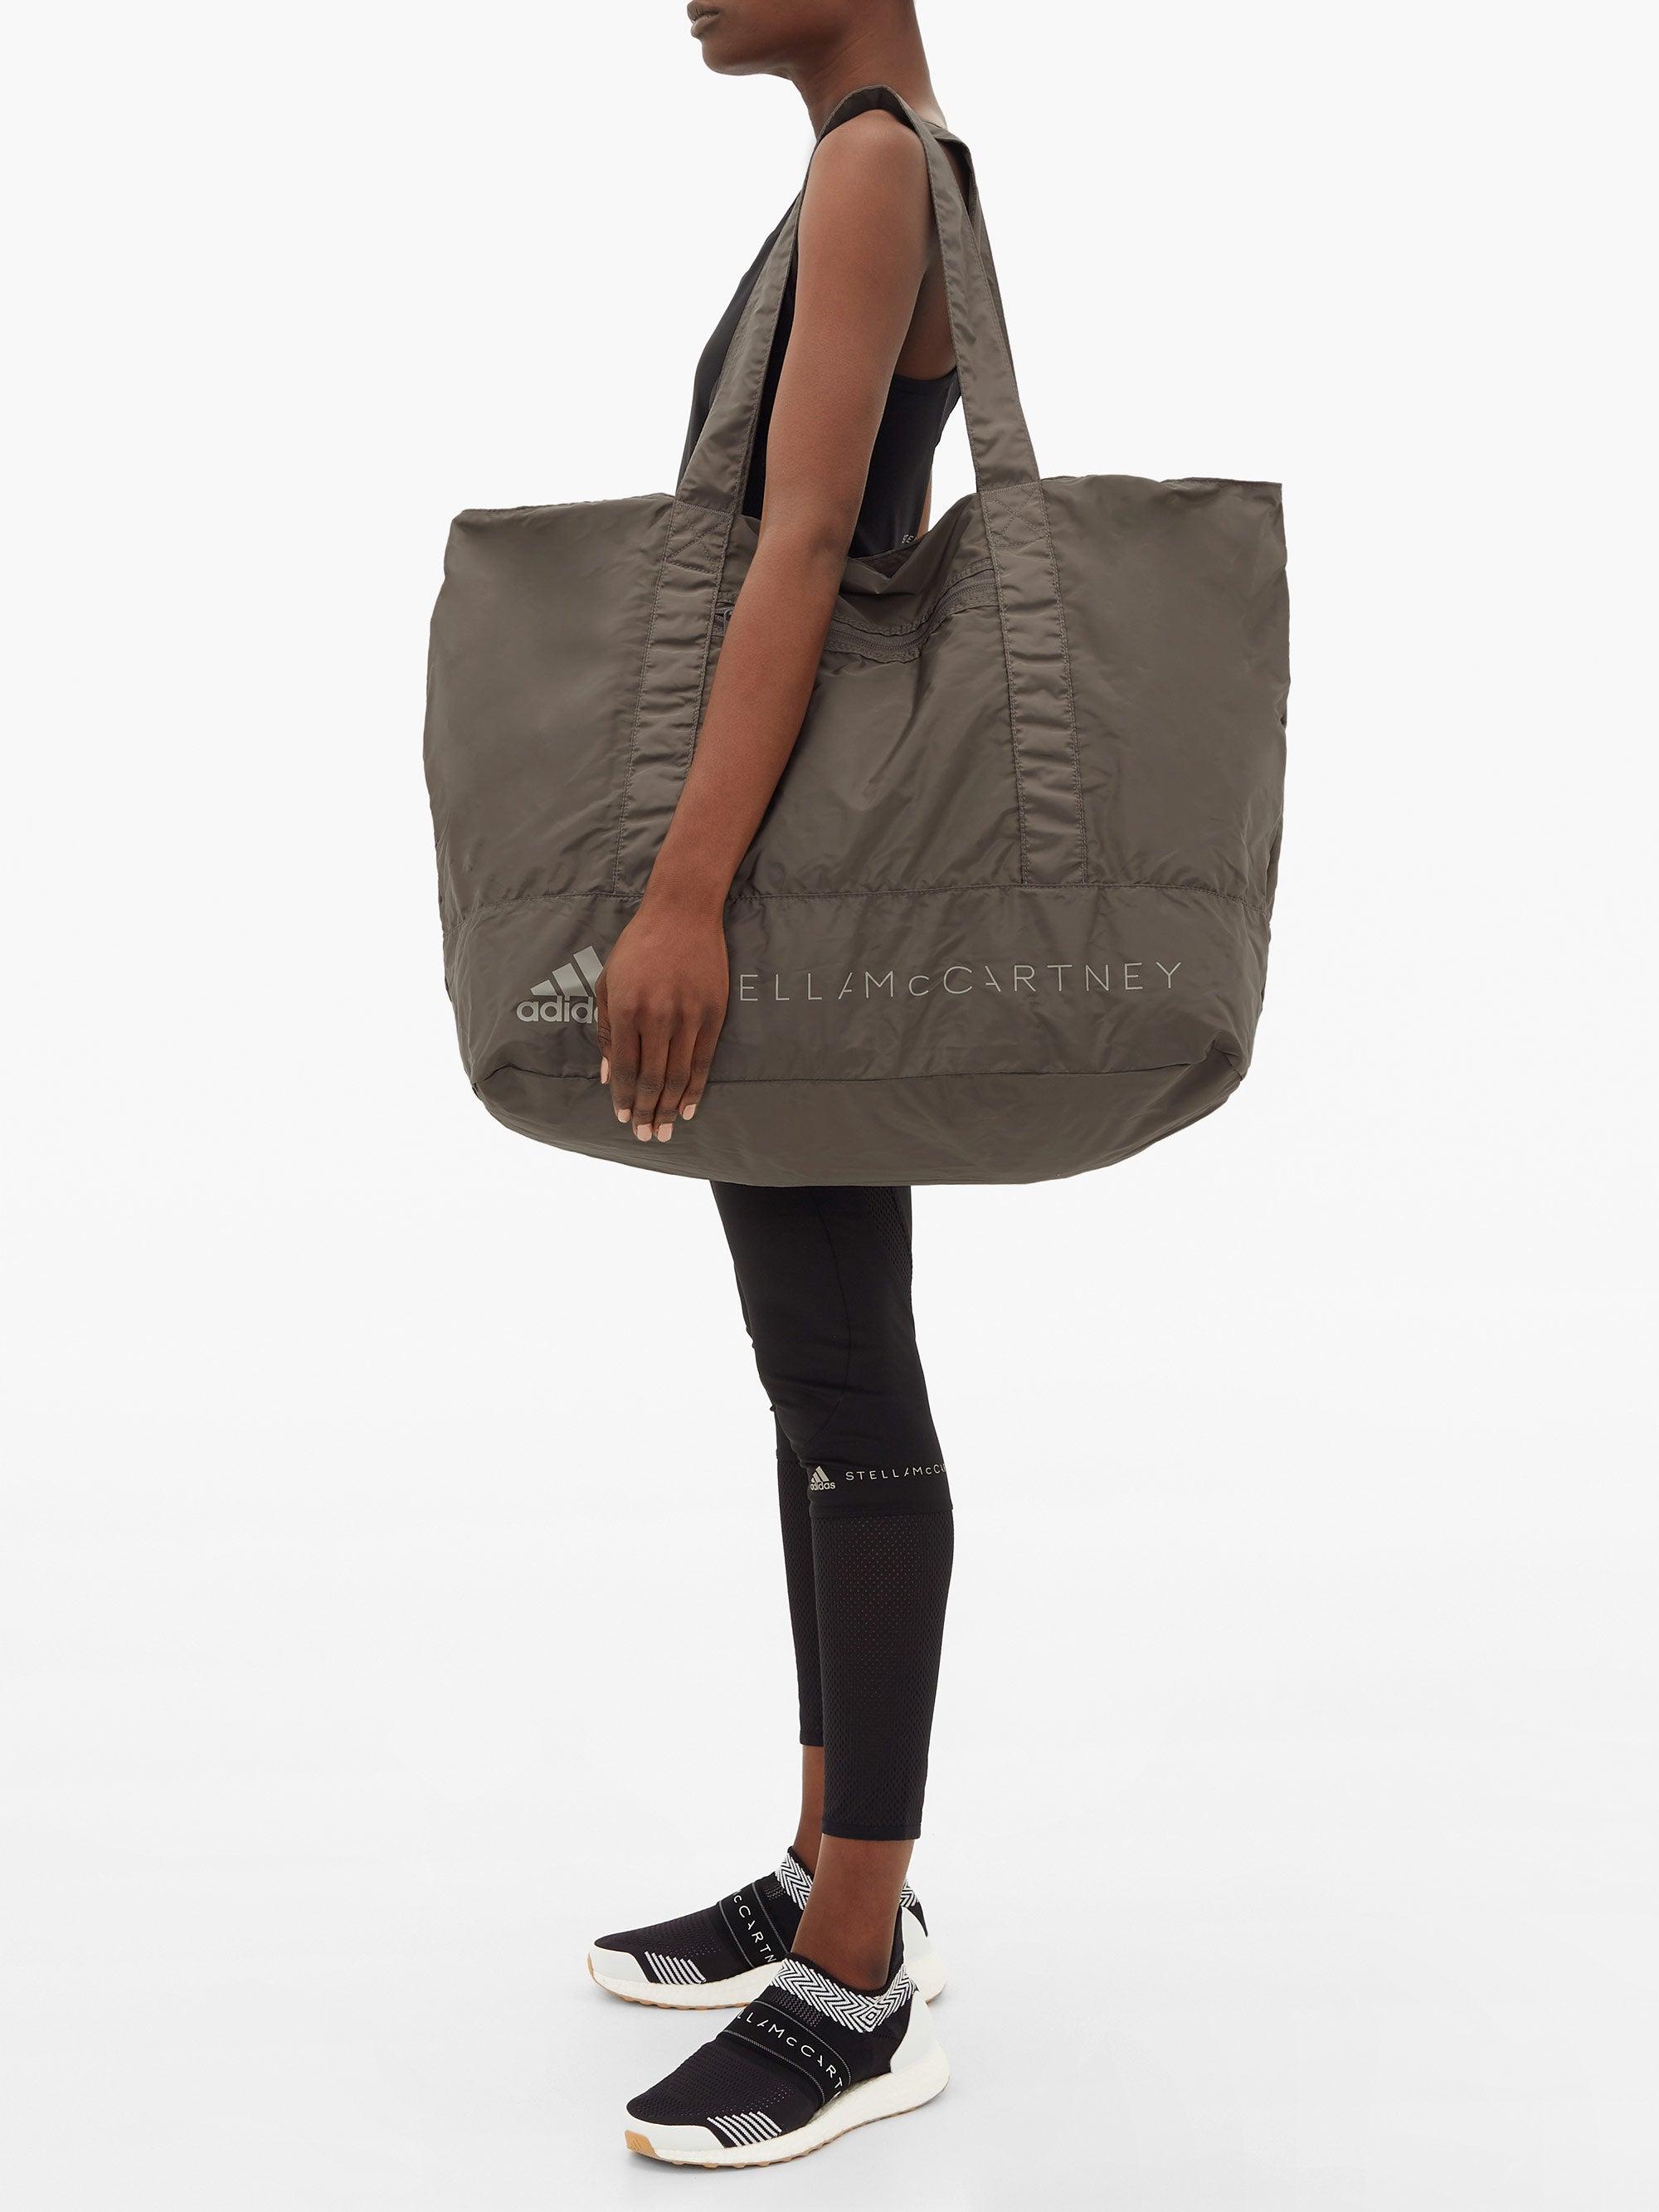 adidas By Stella McCartney Oversized Nylon Tote Bag in Gray | Lyst